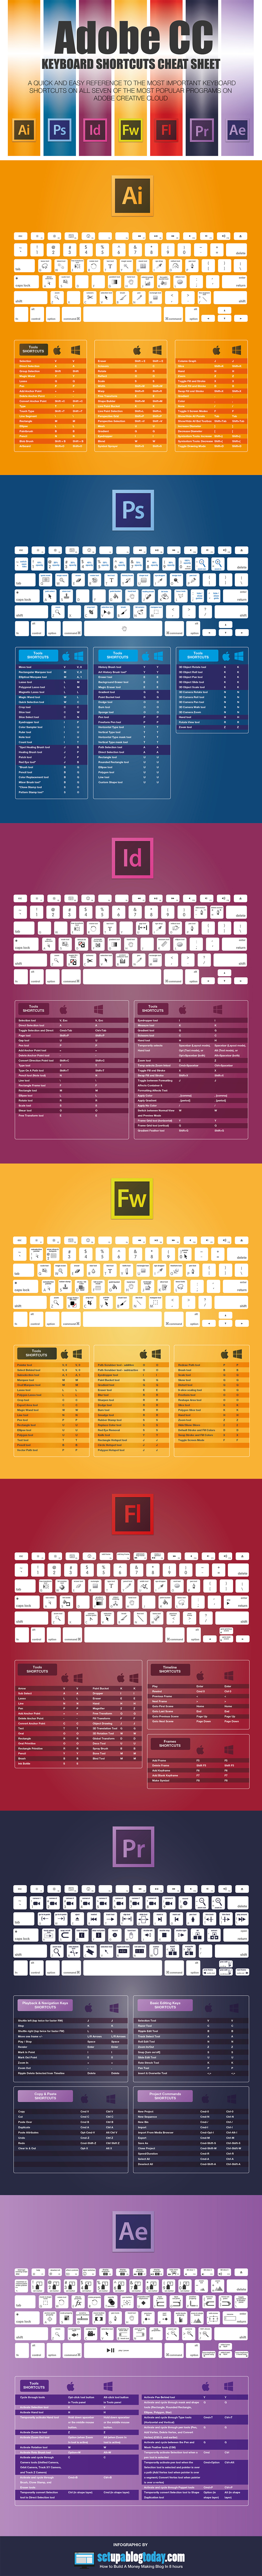 illustrator keyboard shortcuts pdf